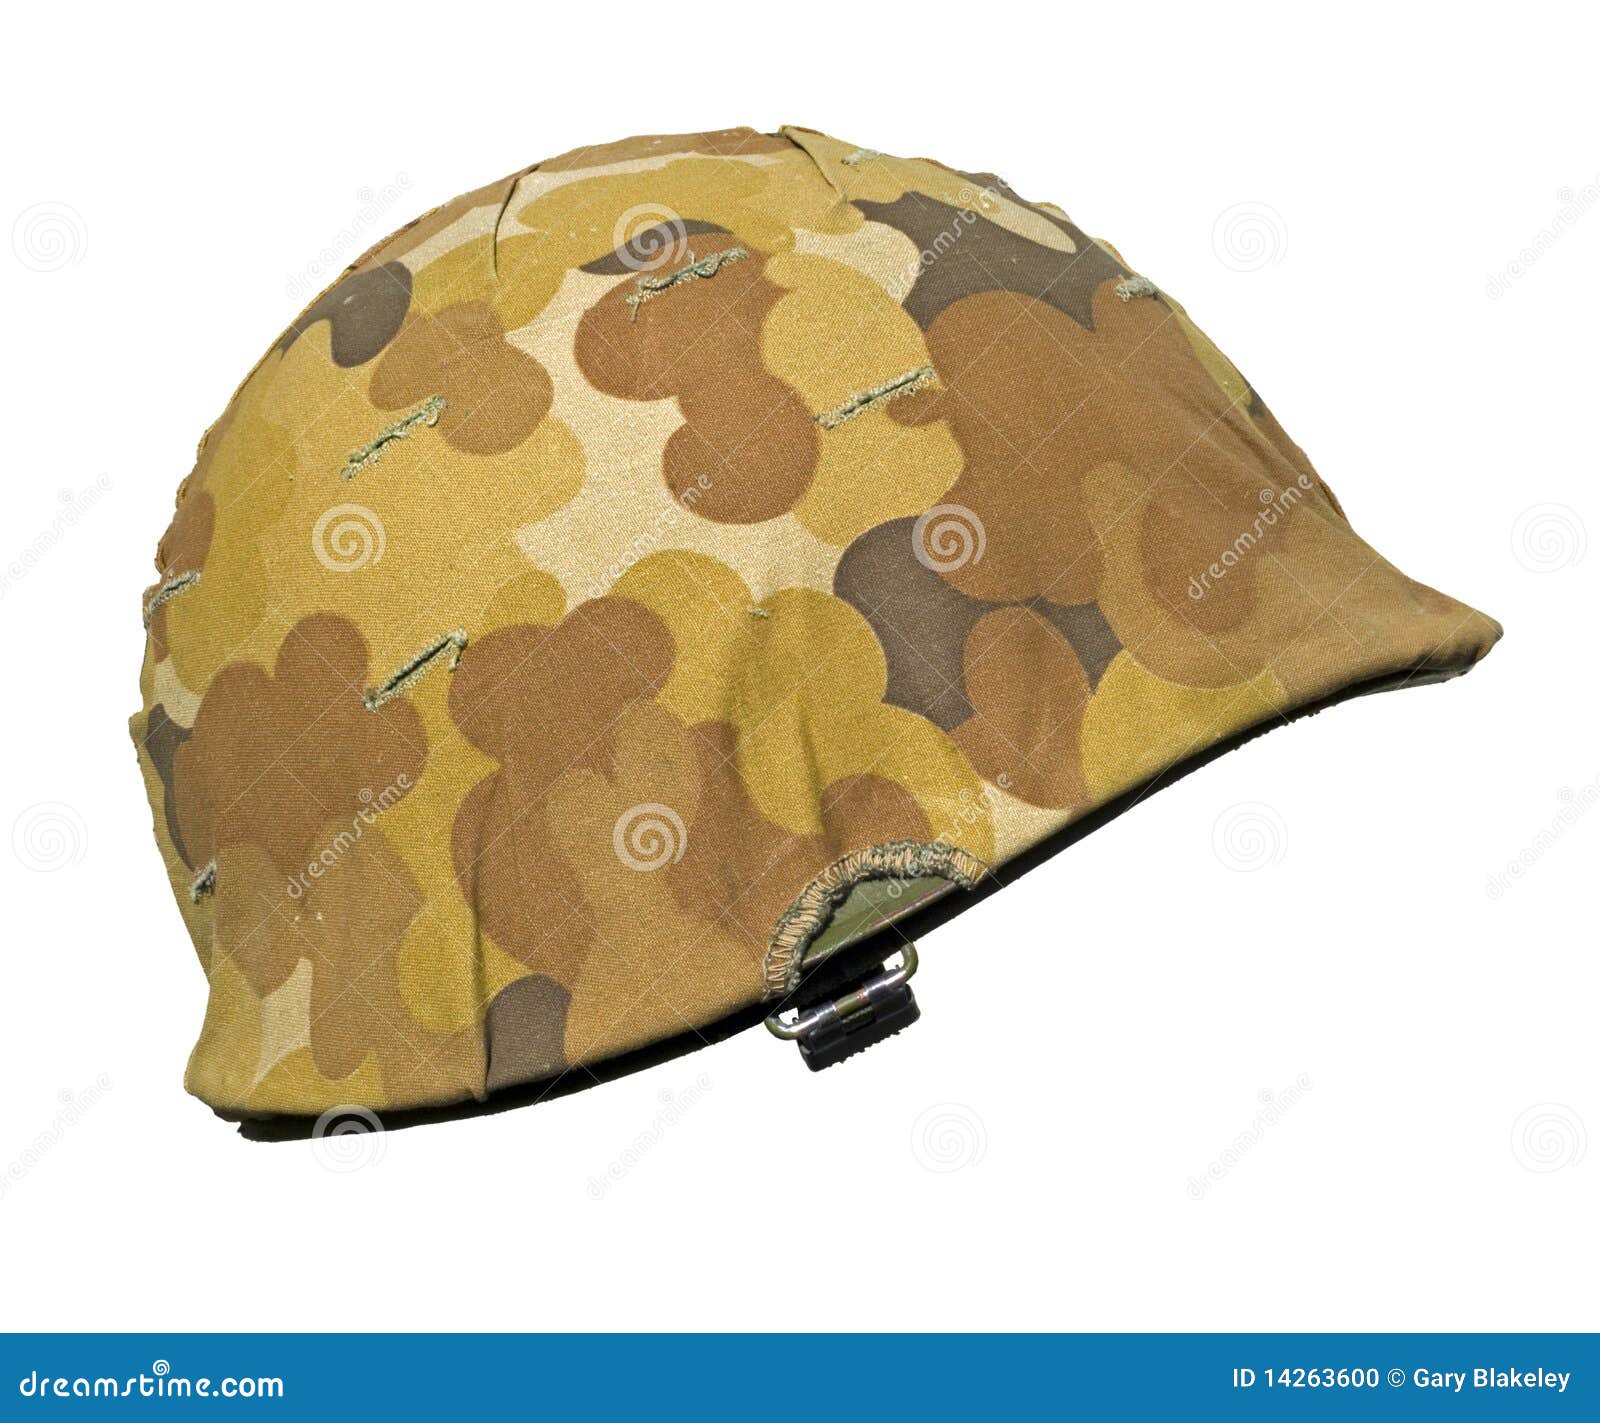 us-korean-war-helmet-14263600.jpg